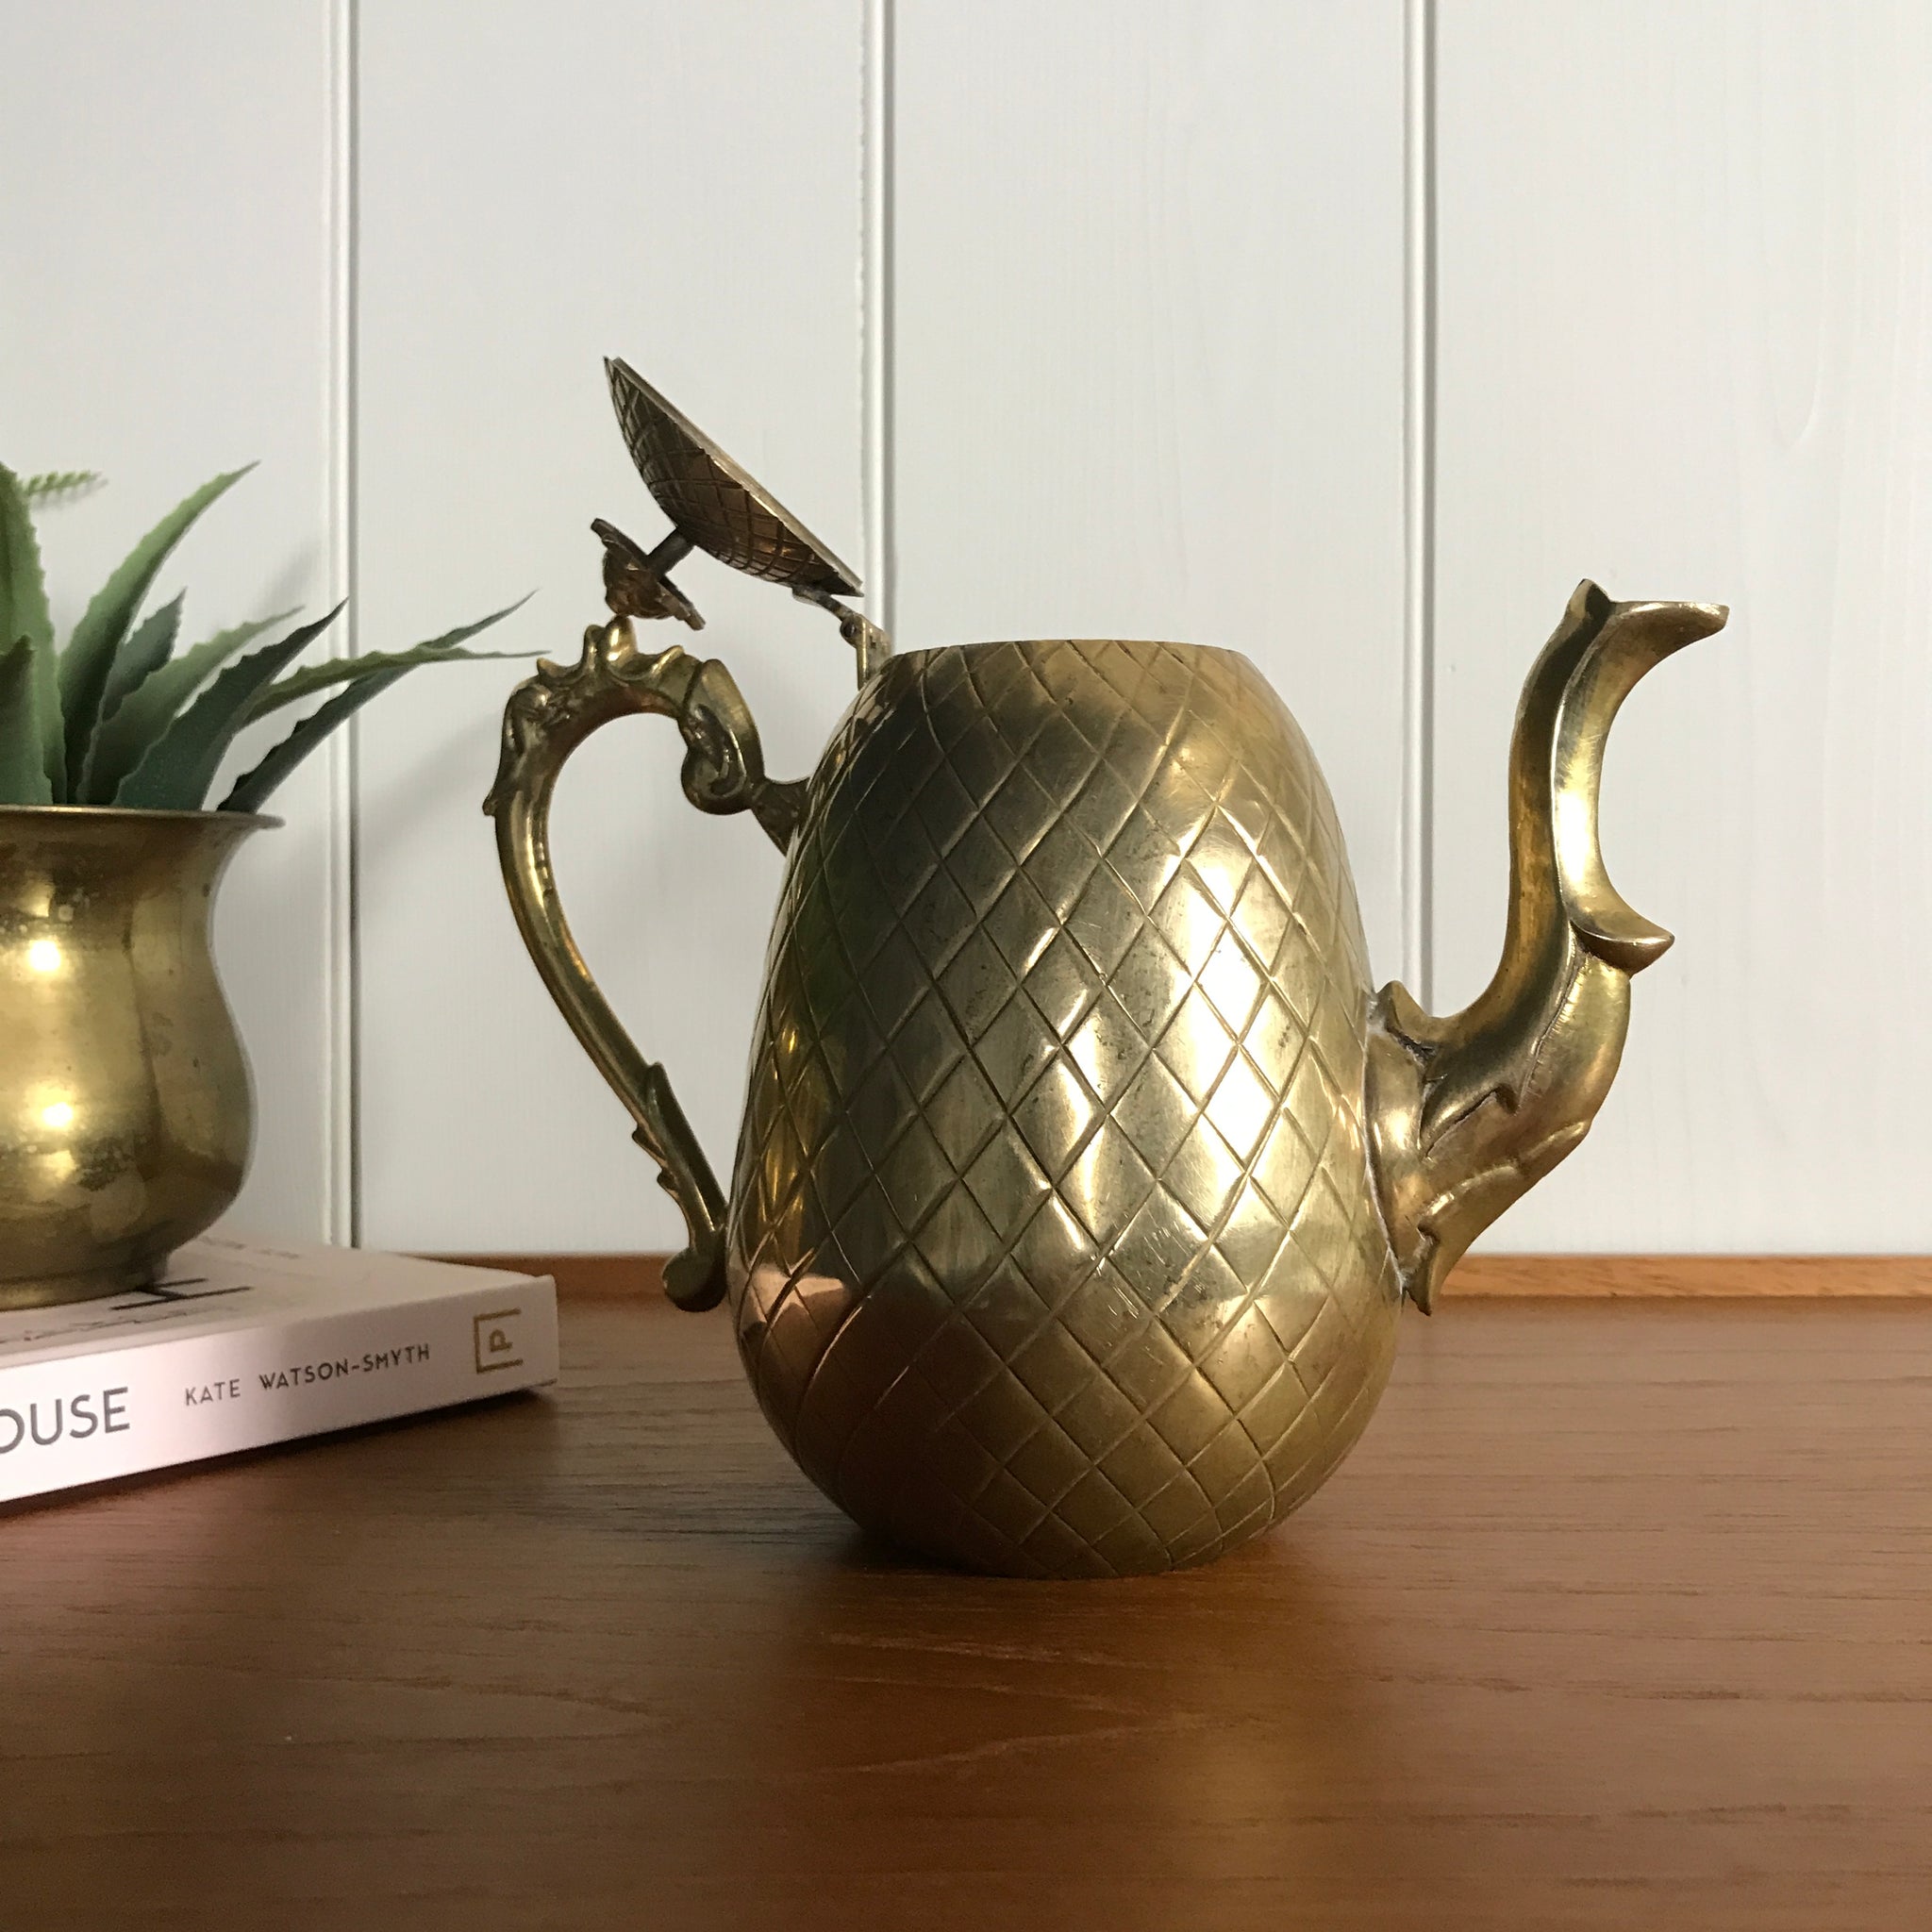 Vintage Brass Teapot #A1 – Mustard Vintage